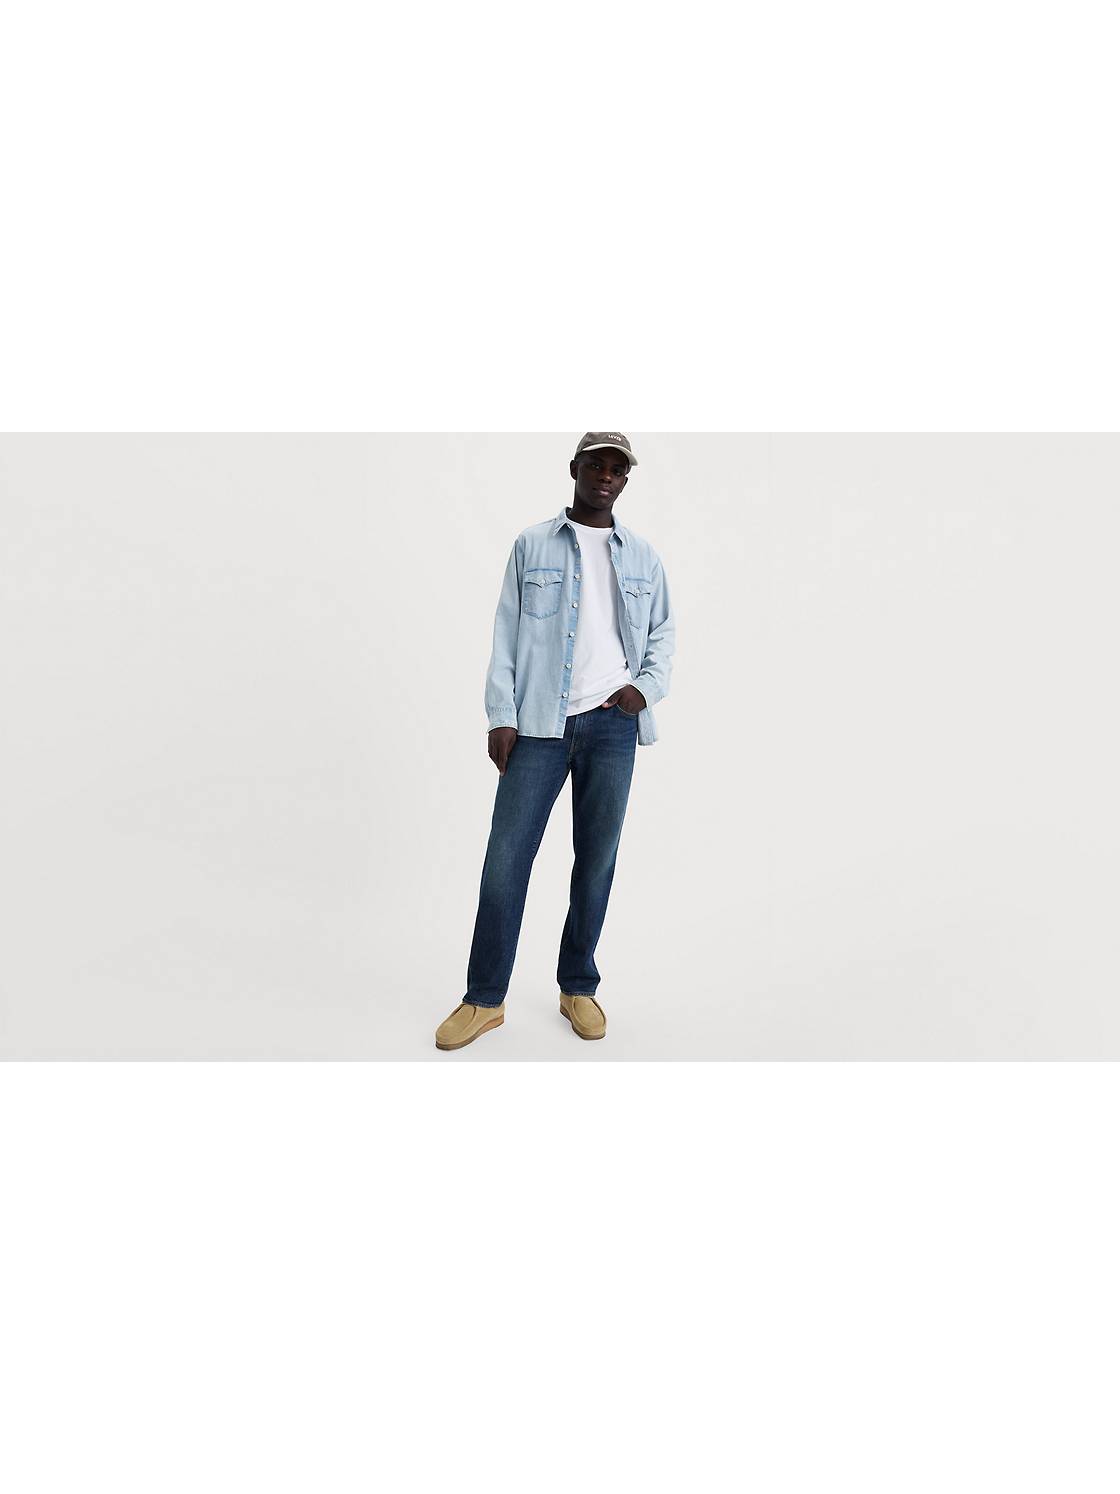 Premium Men's Clothing - Premium Jackets, Jeans & More | Levi's® US